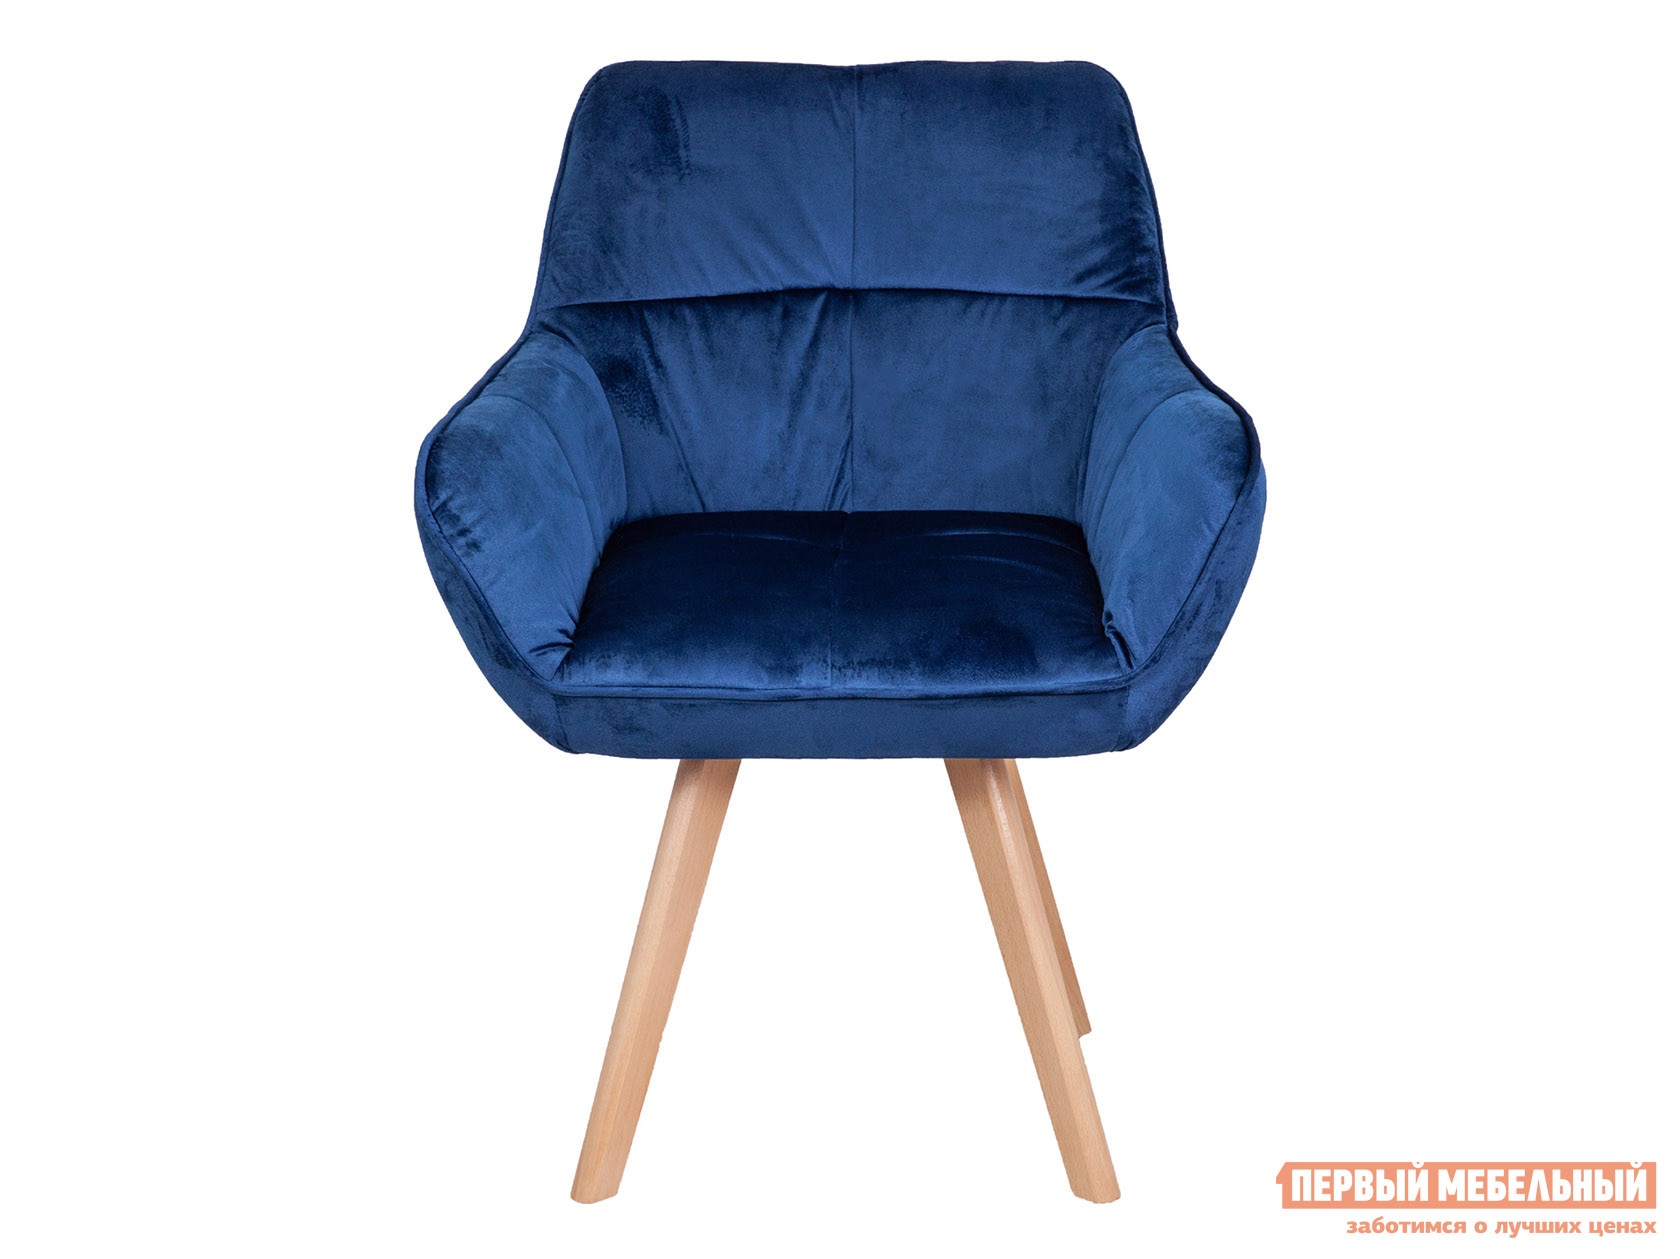 Стул стул soft темно-синий, велюр preview 1